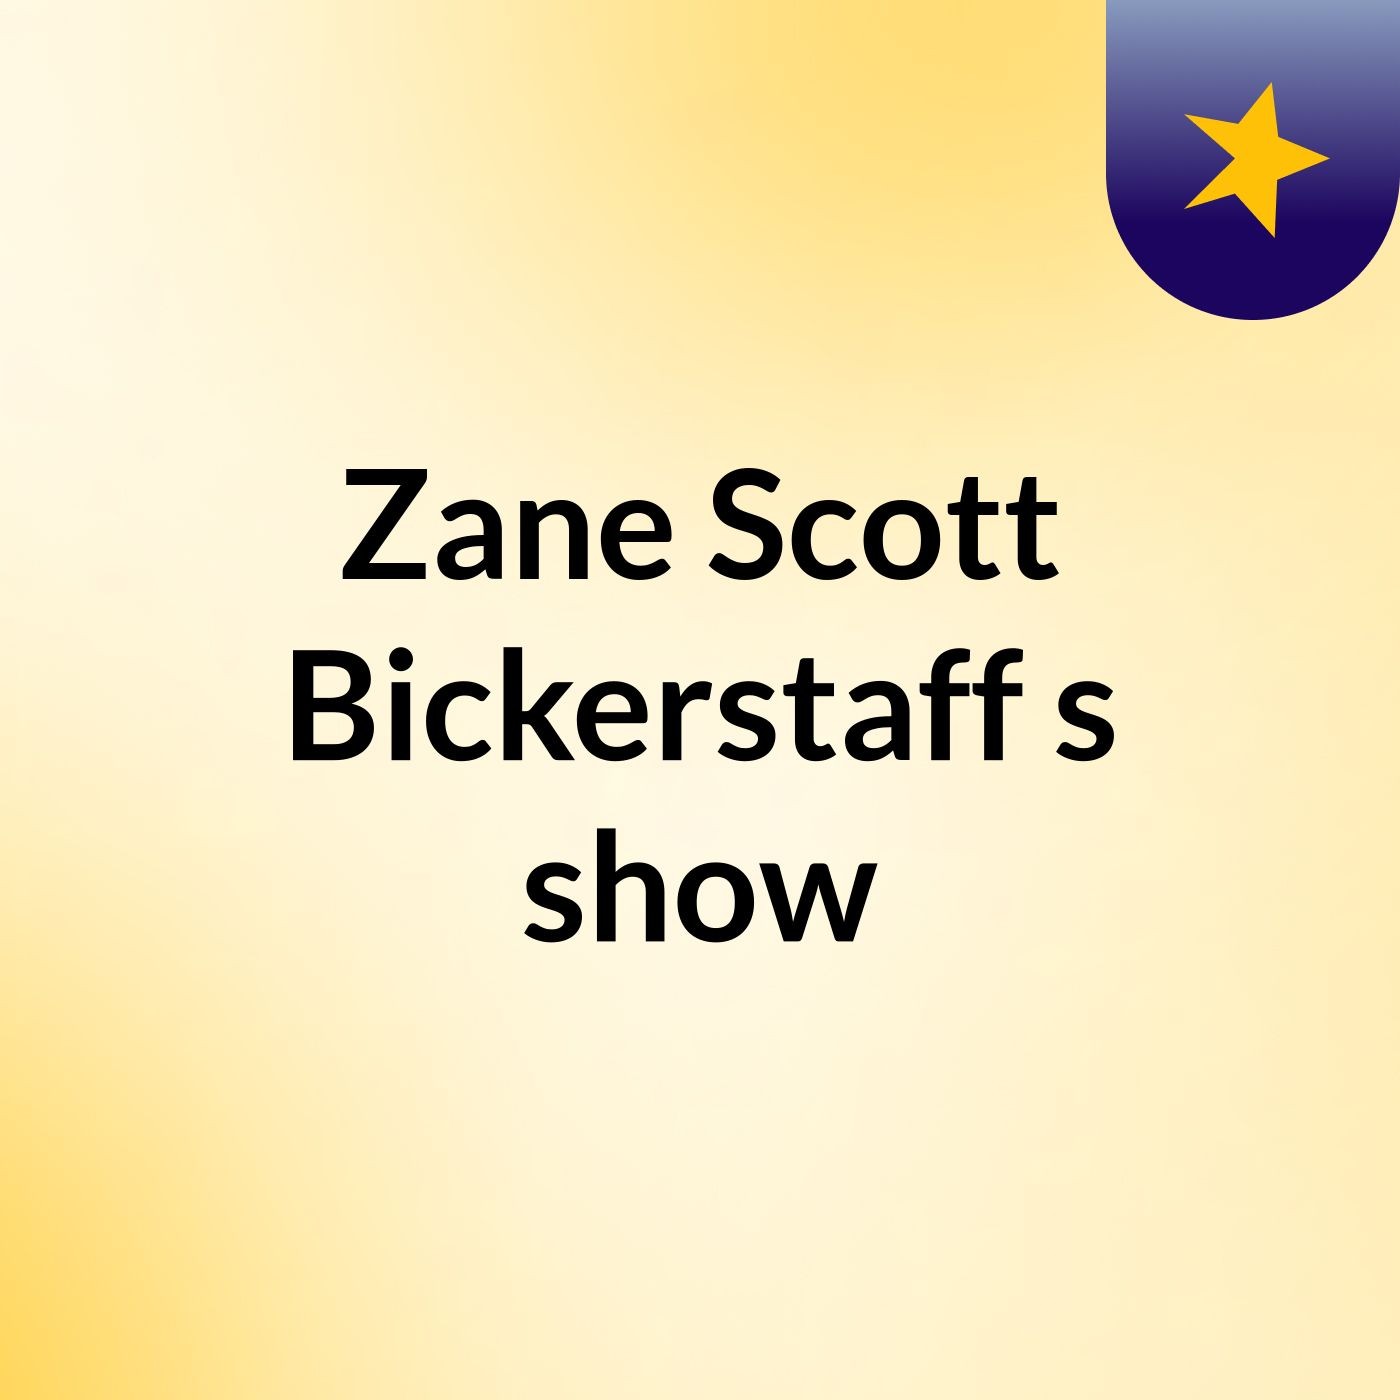 Zane Scott Bickerstaff's show